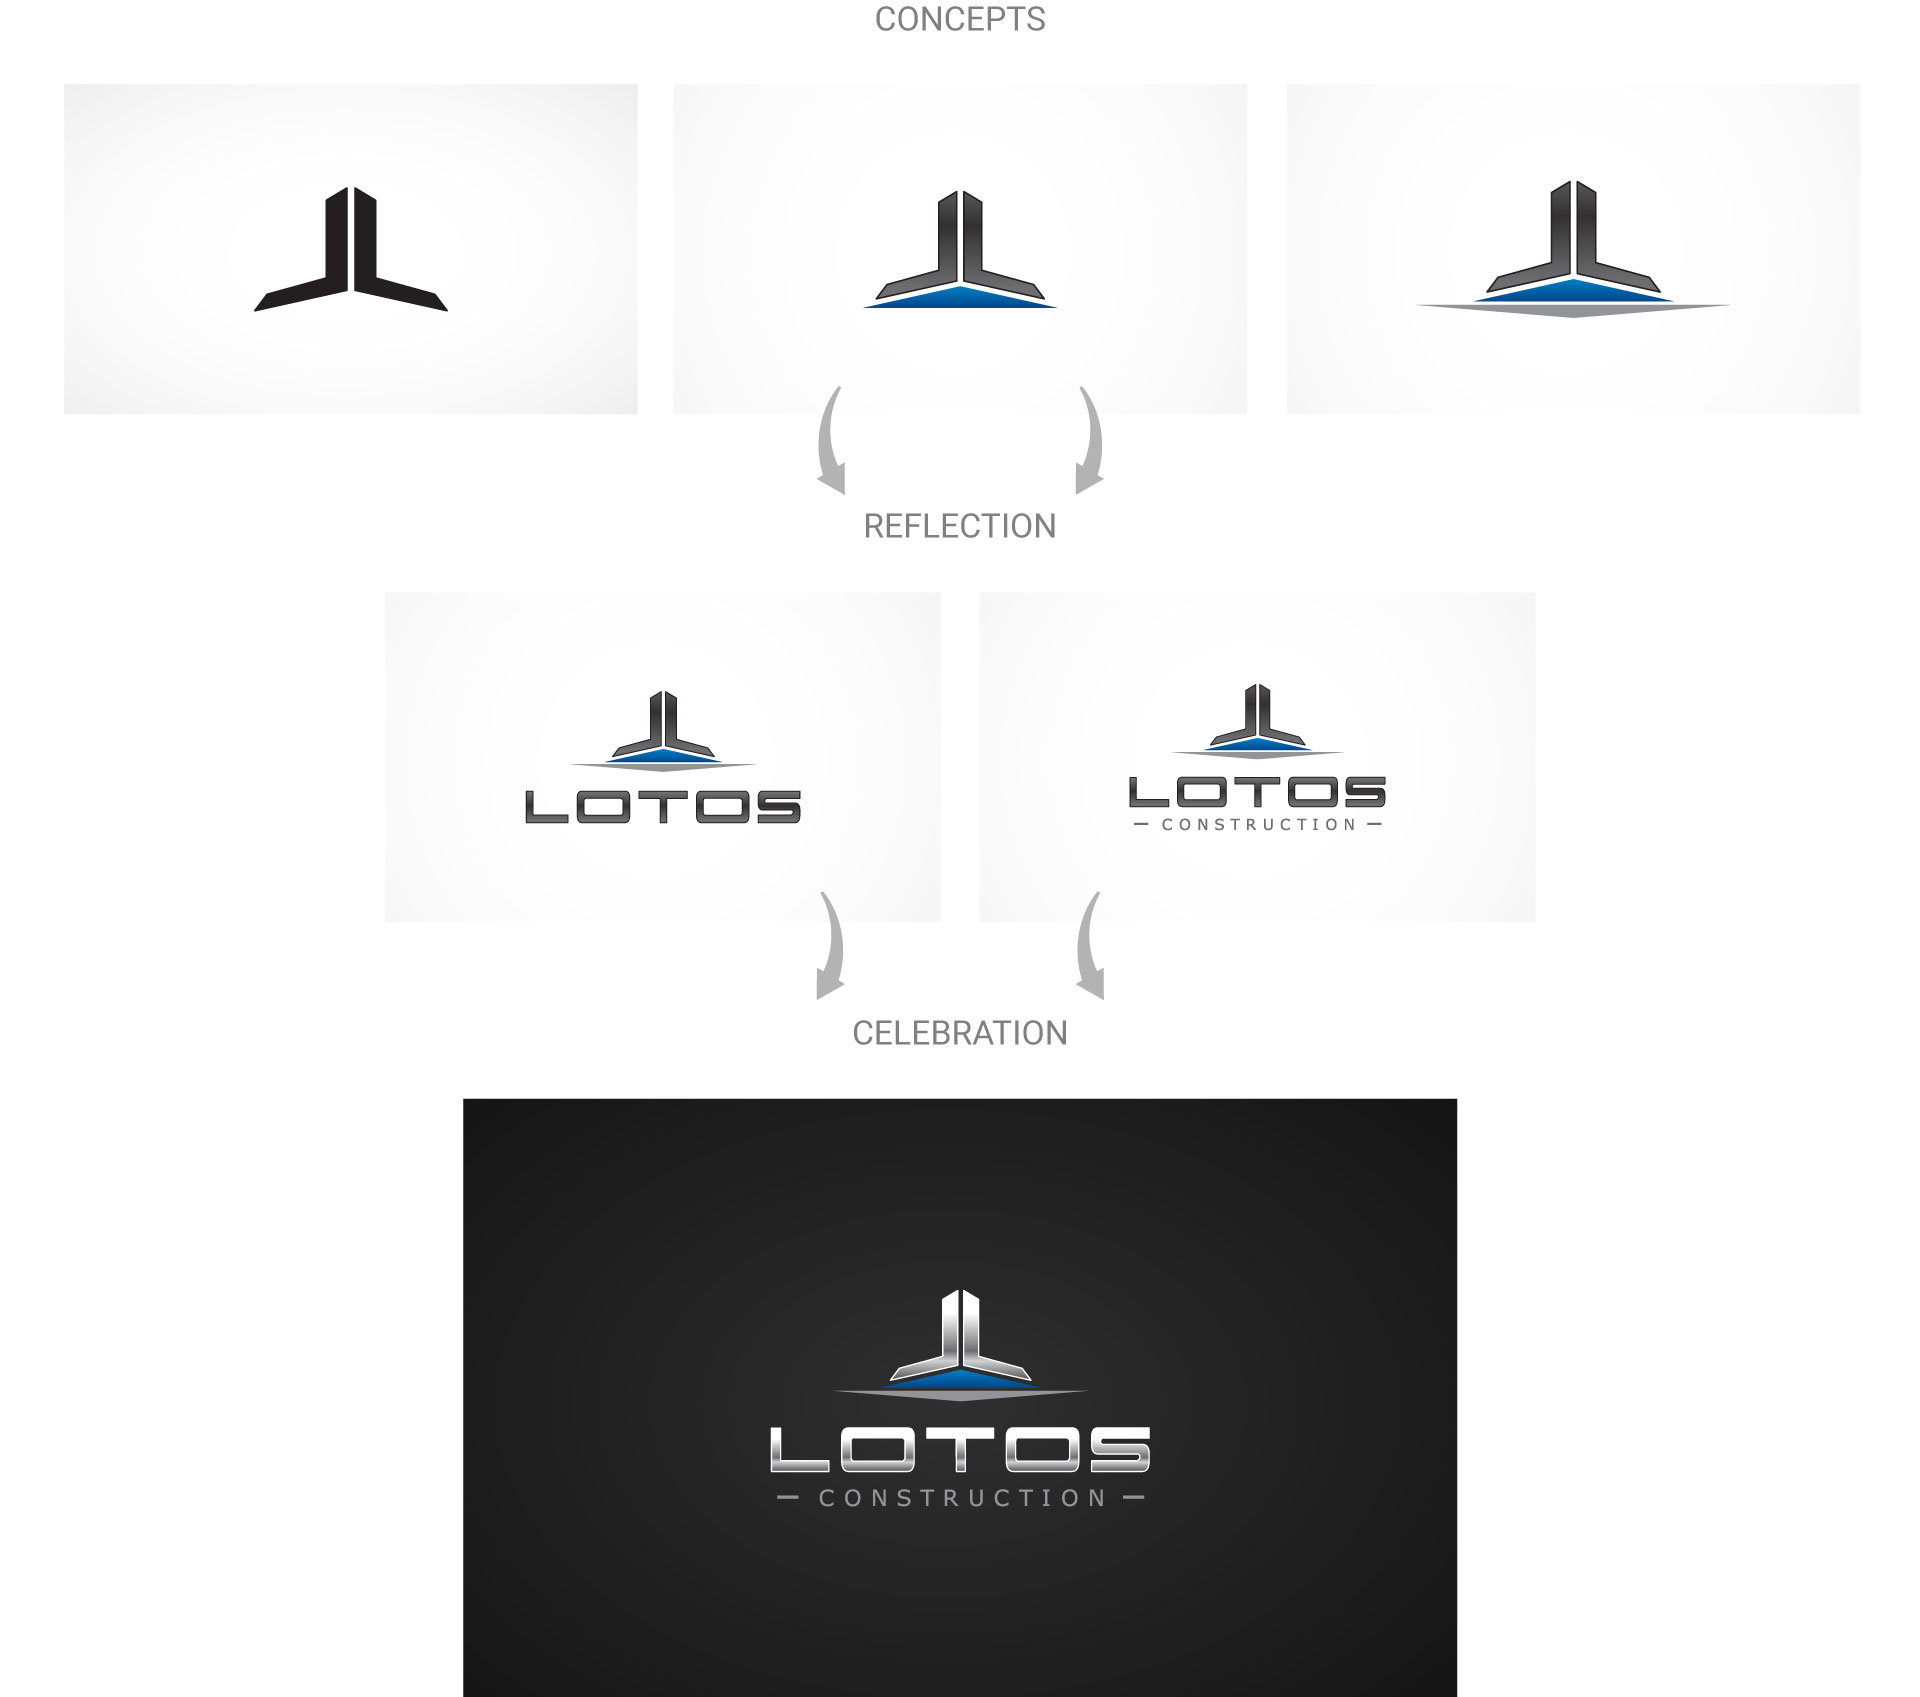 lotos-construction-brand-logo-design-by-mapleweb-vancouver-canada-lotos-flags-mock